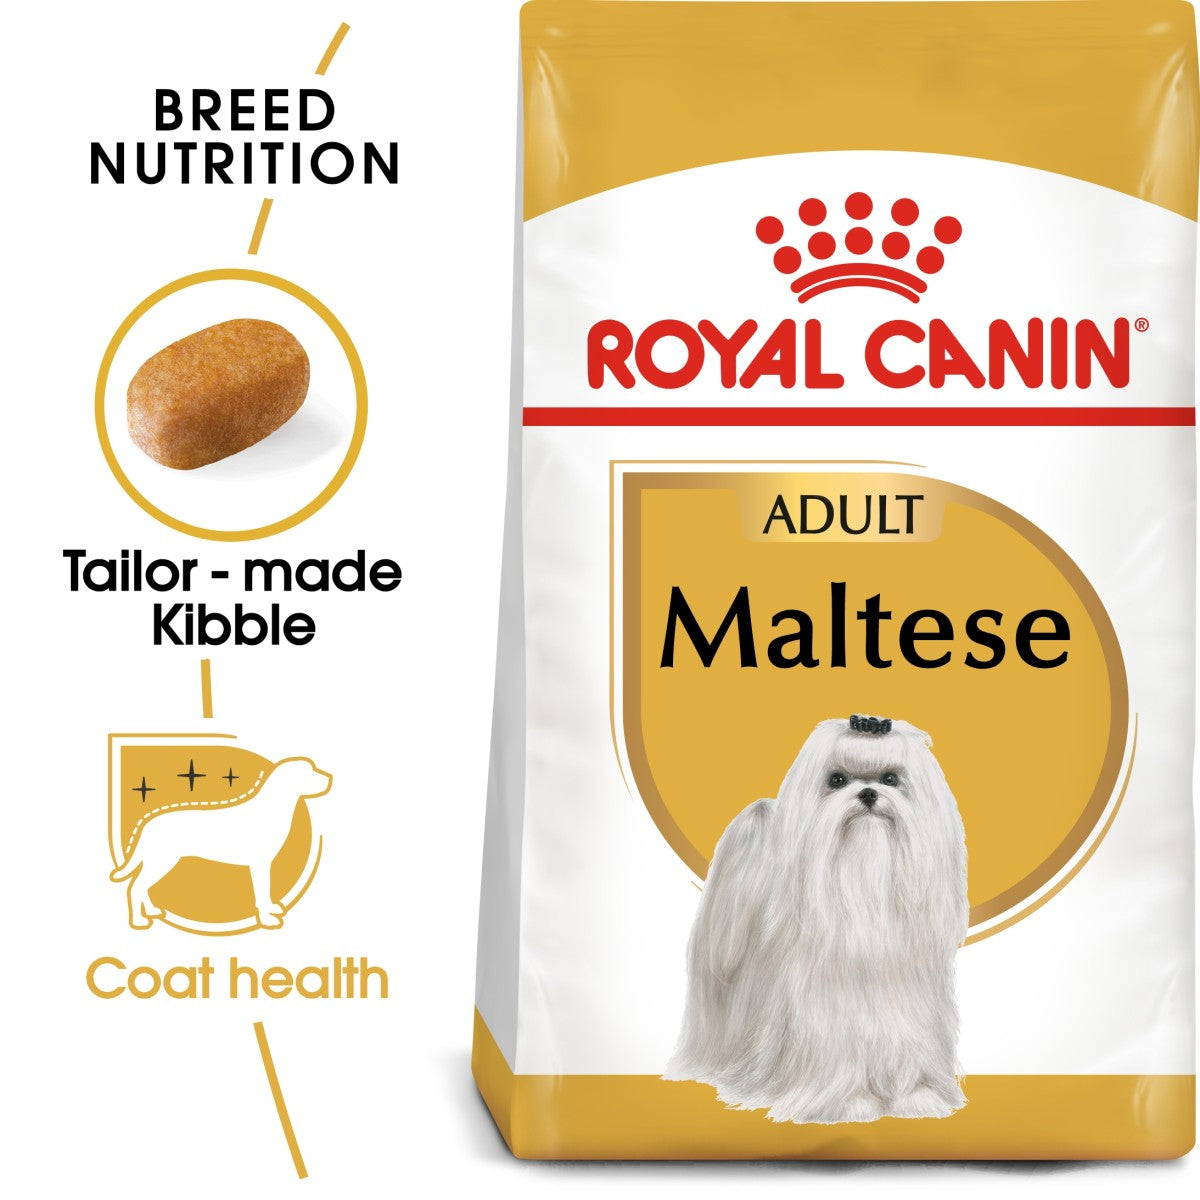 Royal canin Maltese Adult 1.5 KG